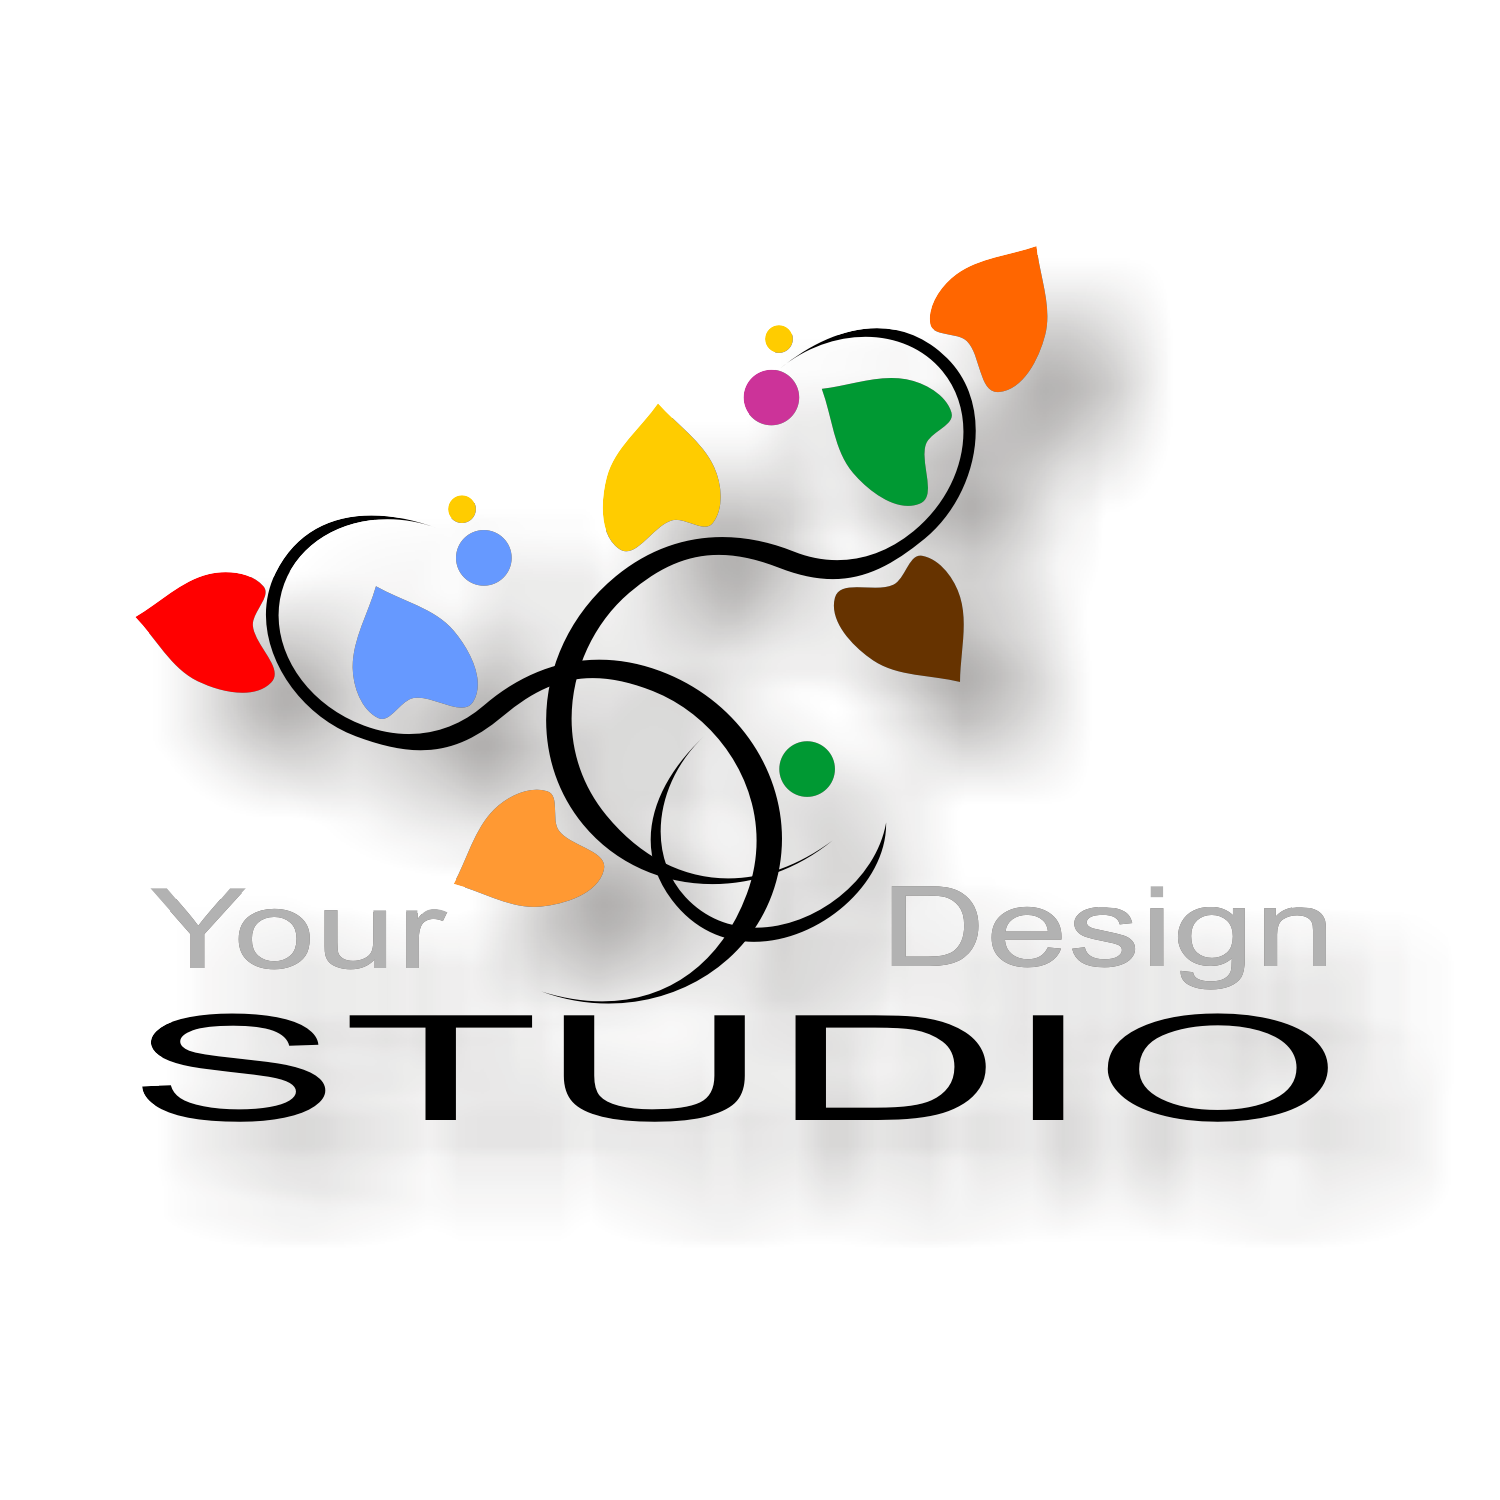 Vector for free use: Design Studio logo